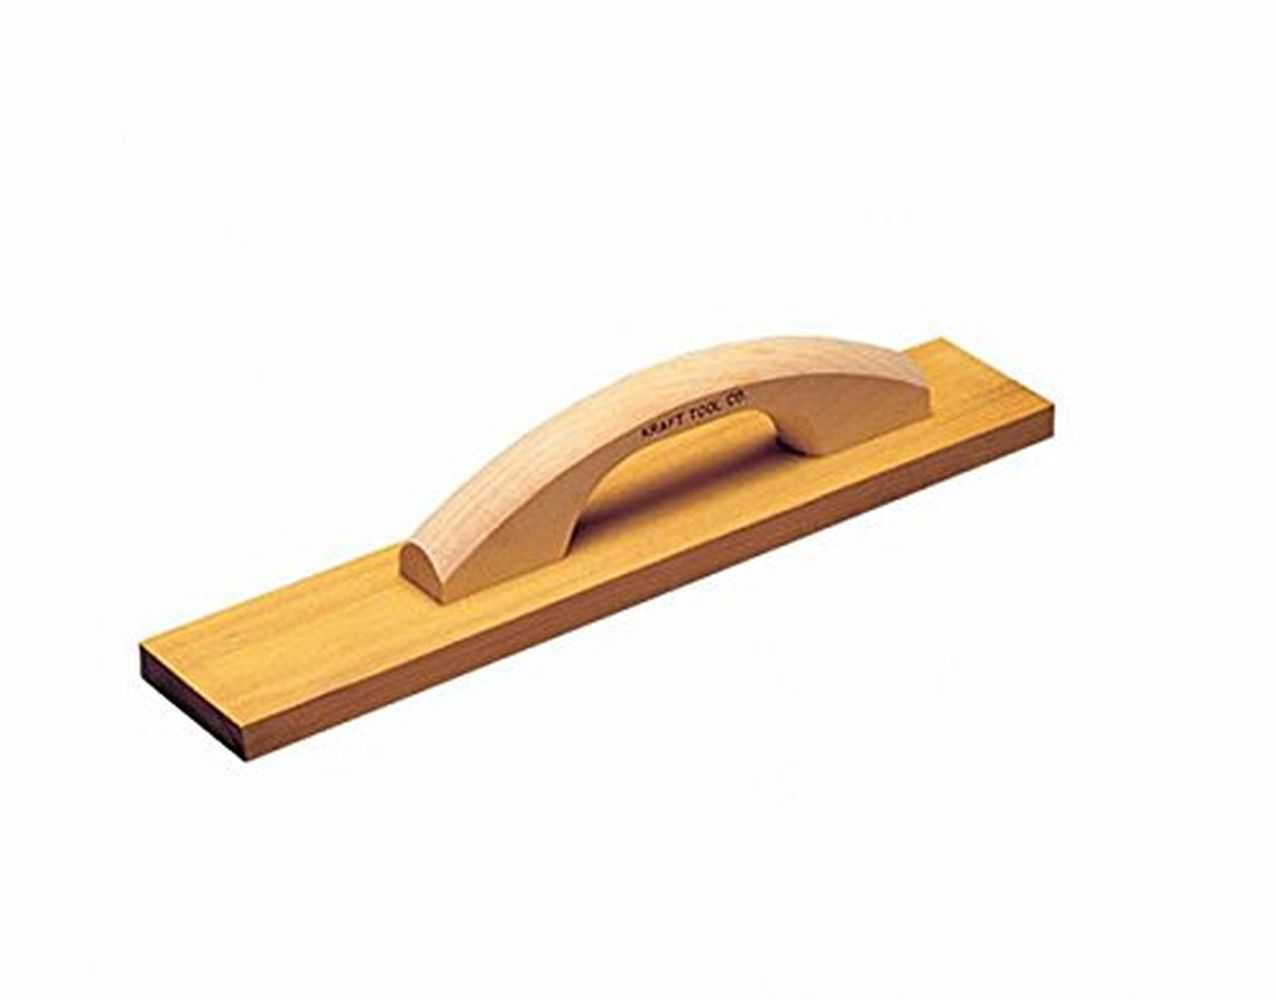 Kraft Tool CF642 Bodark Wood Hand Float, 16 x 2-1/4-Inch